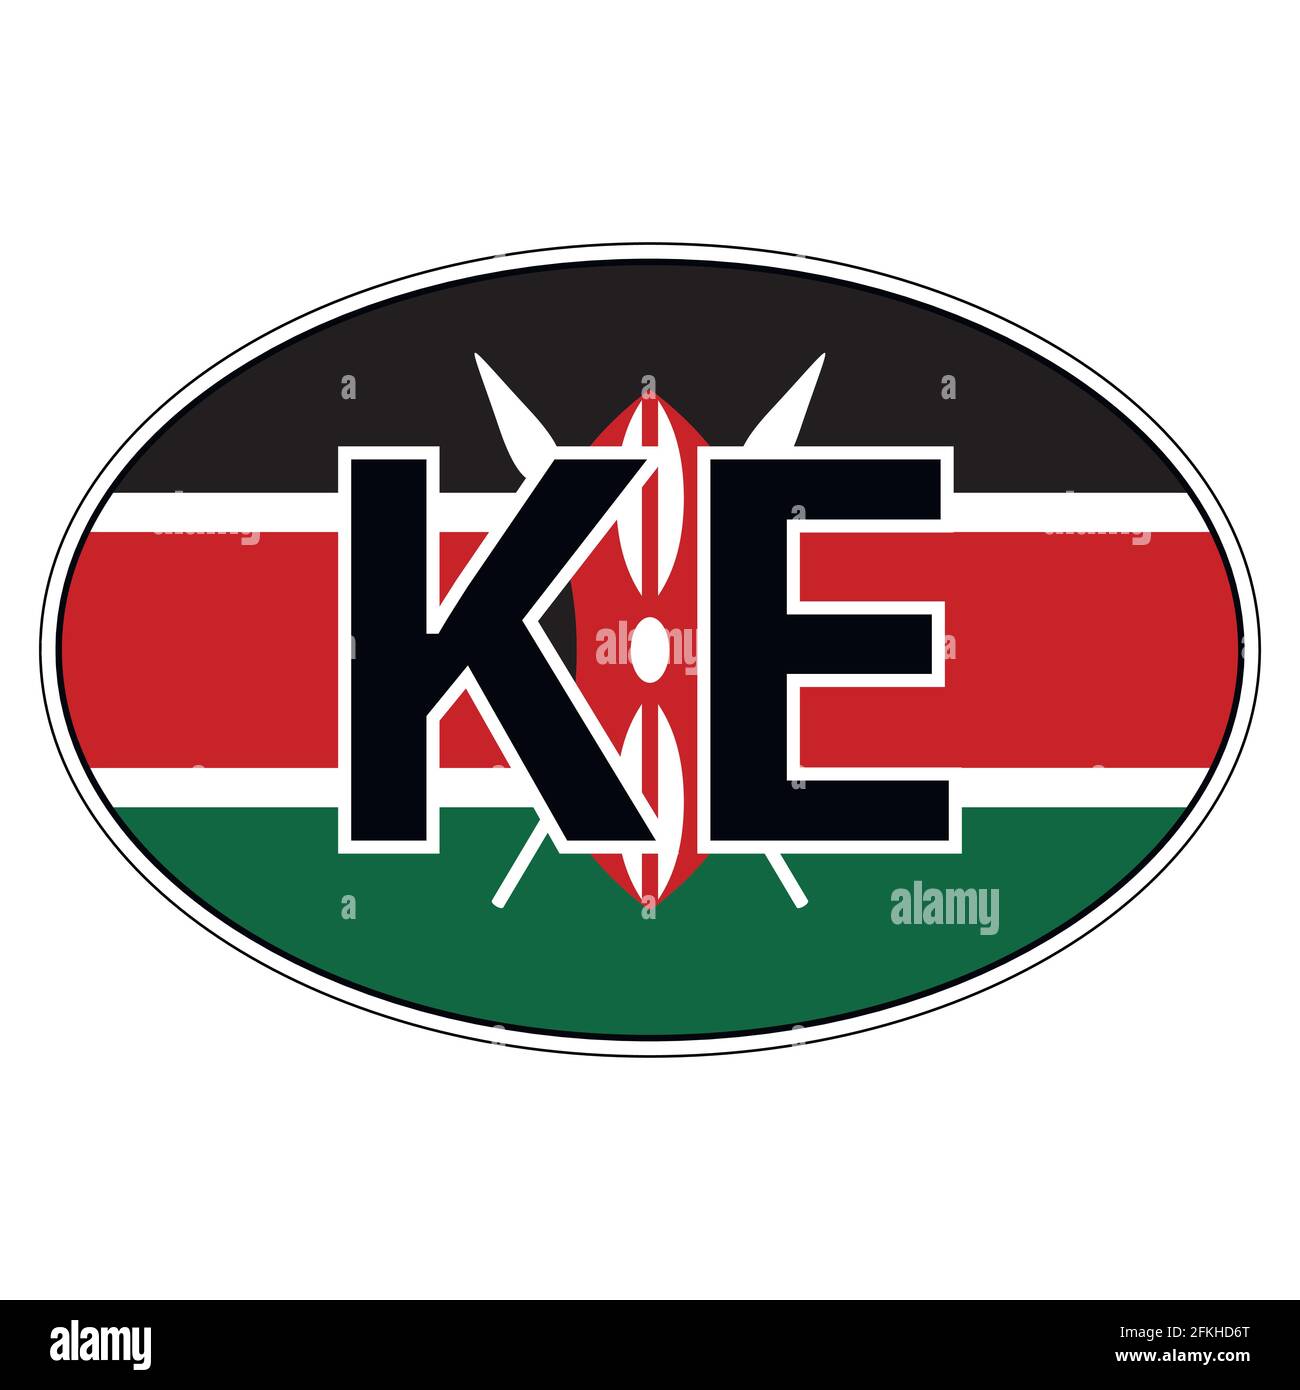 Sticker on car, flag Republic Kenya Stock Vector